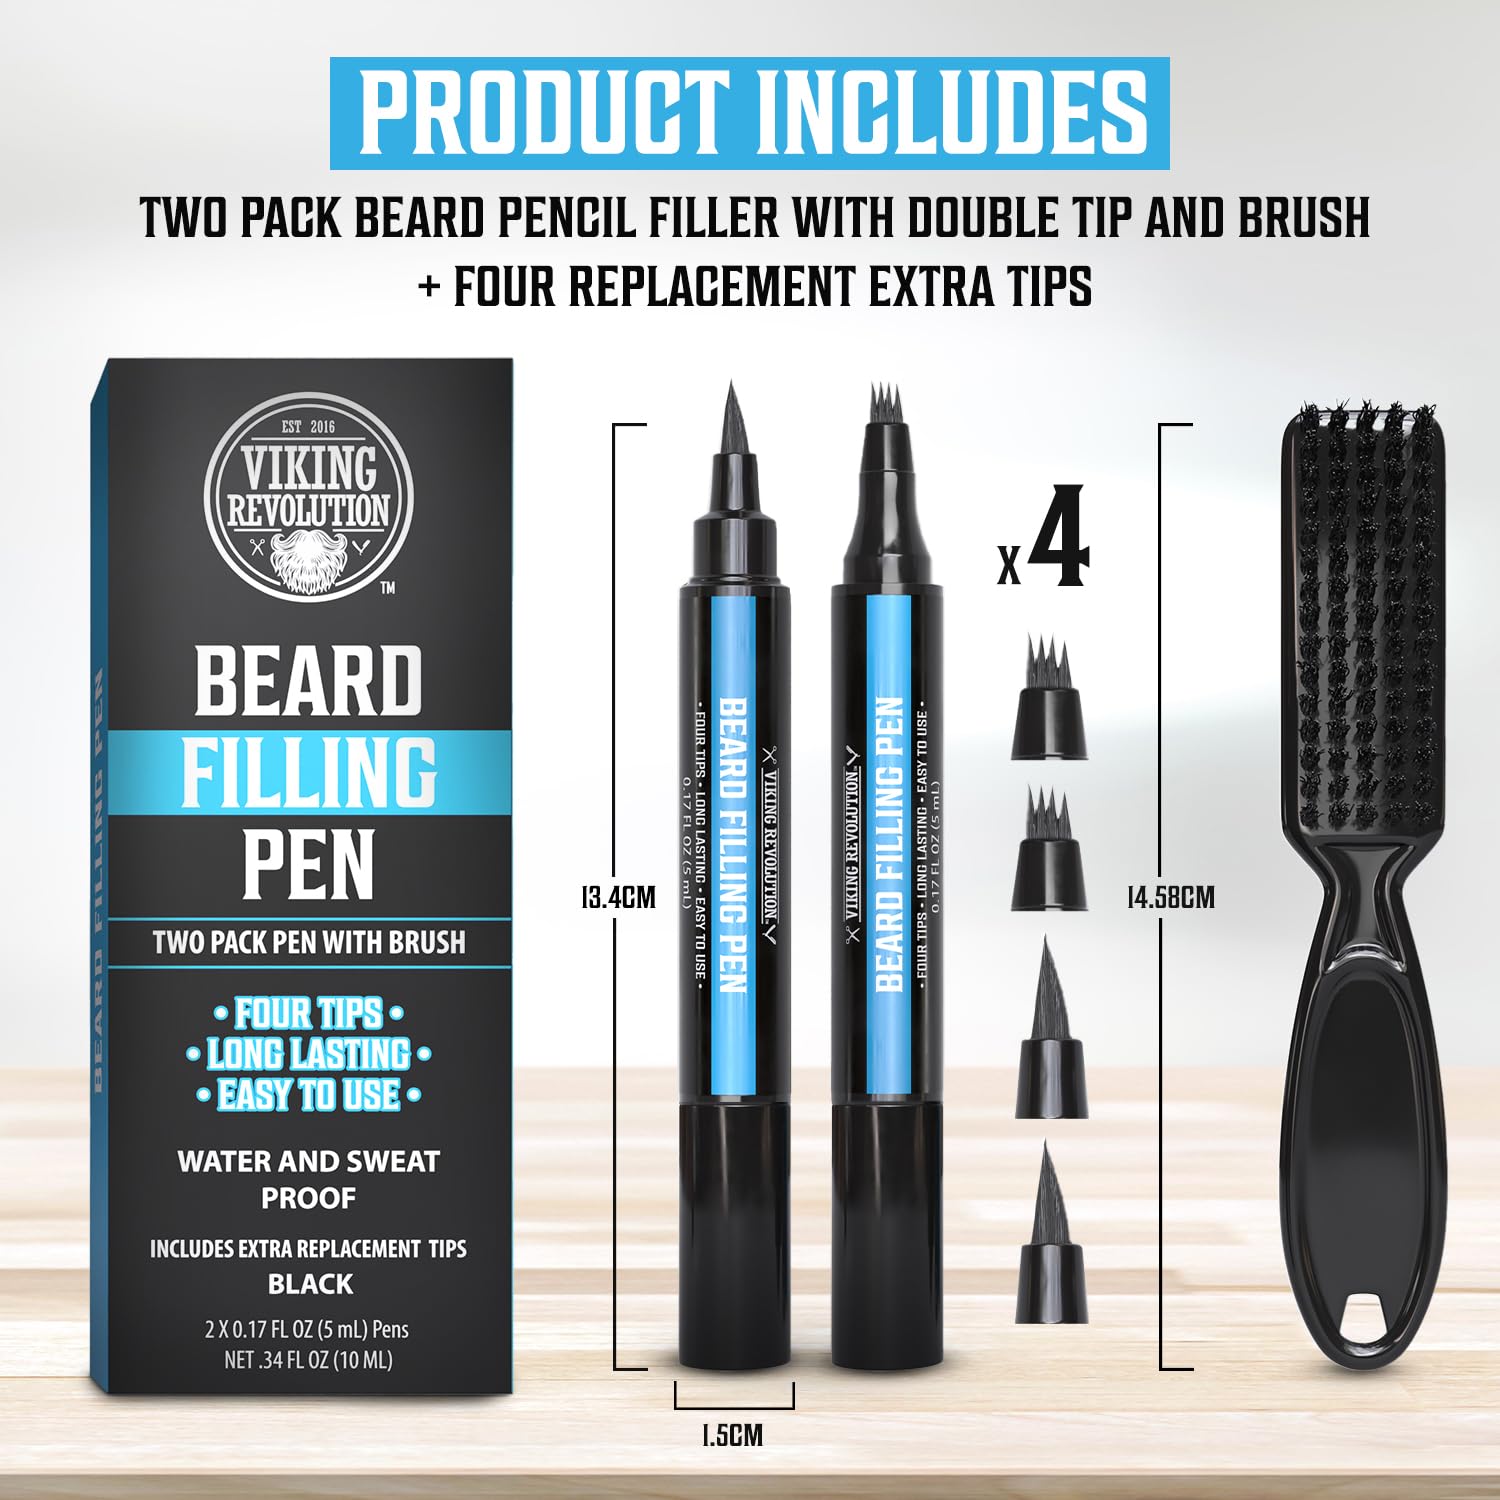 Viking Revolution Beard Pen (2 Pack) - Black Beard Pencil Fi